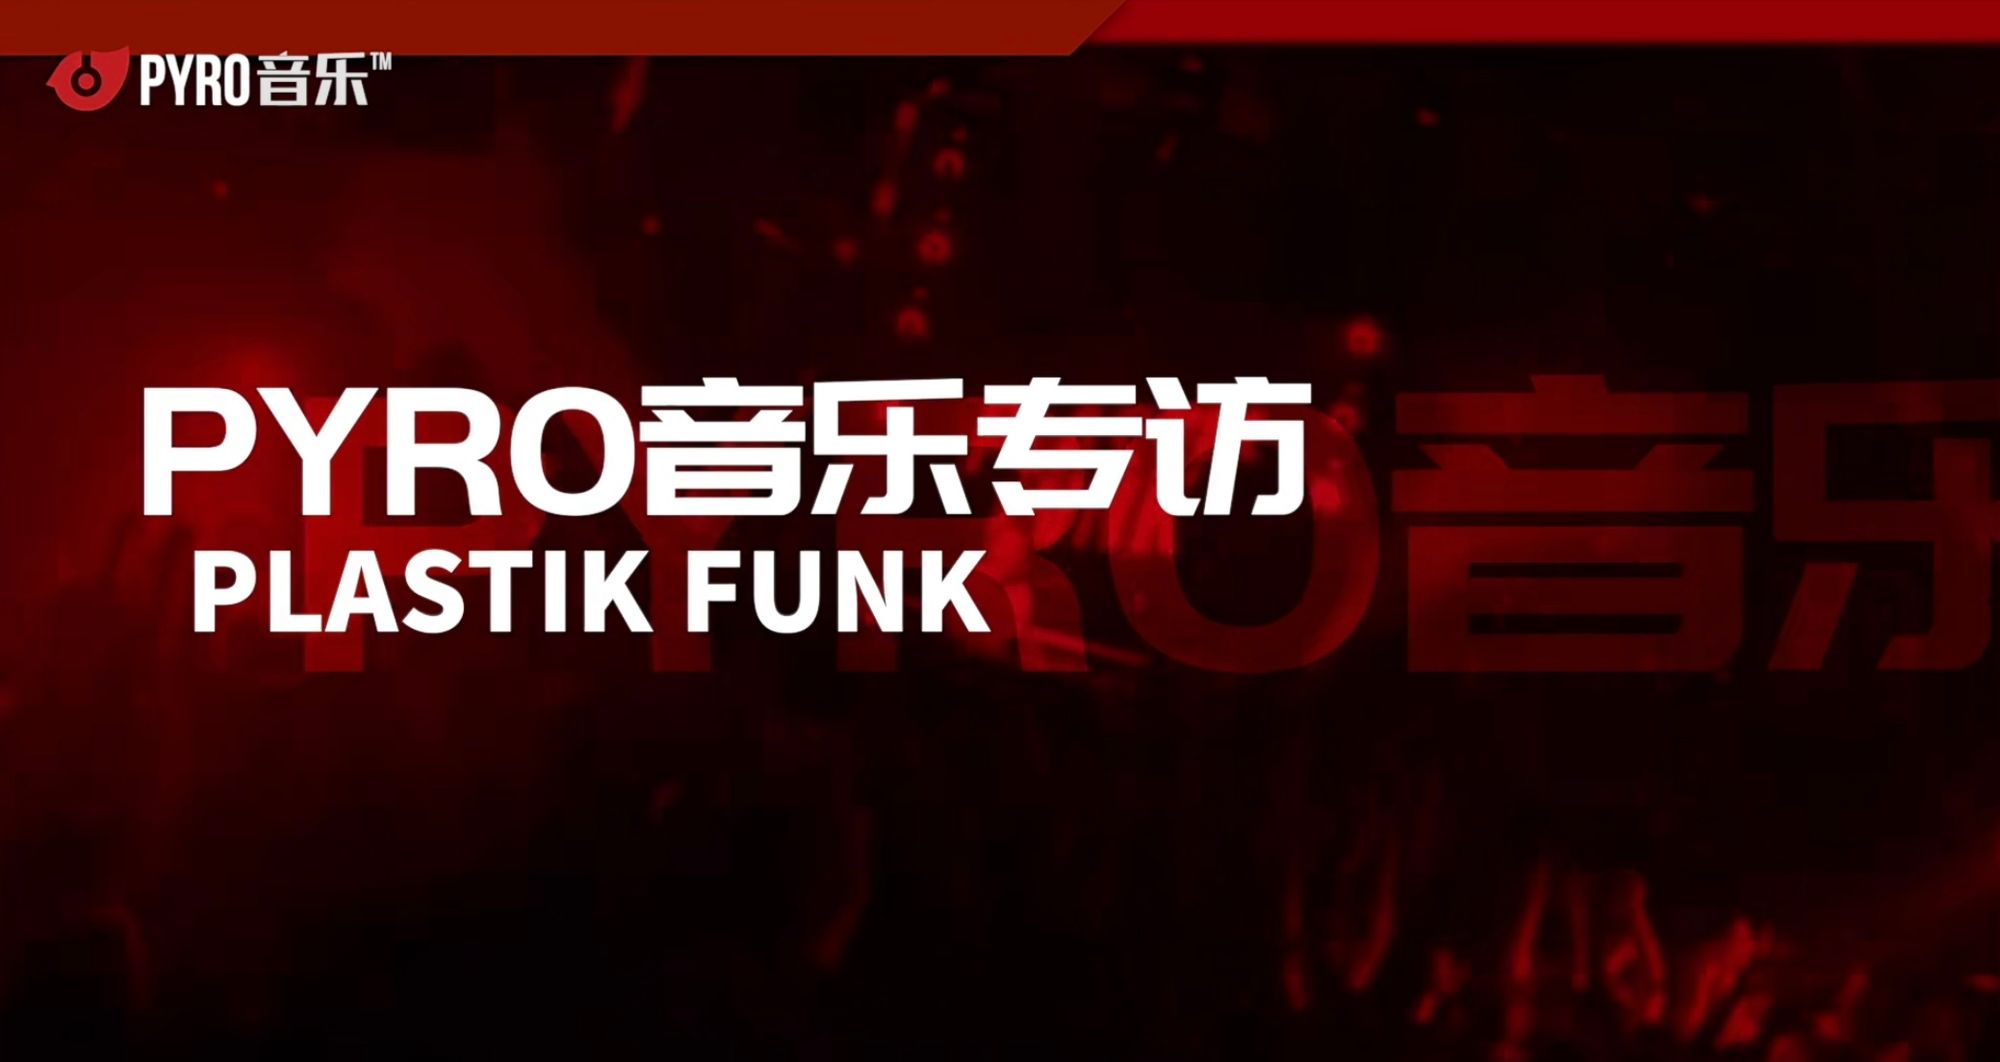 PYRO音乐专访 Plastik Funk: 中国电音越来越国际化，再次回到中国有种回家的感觉！